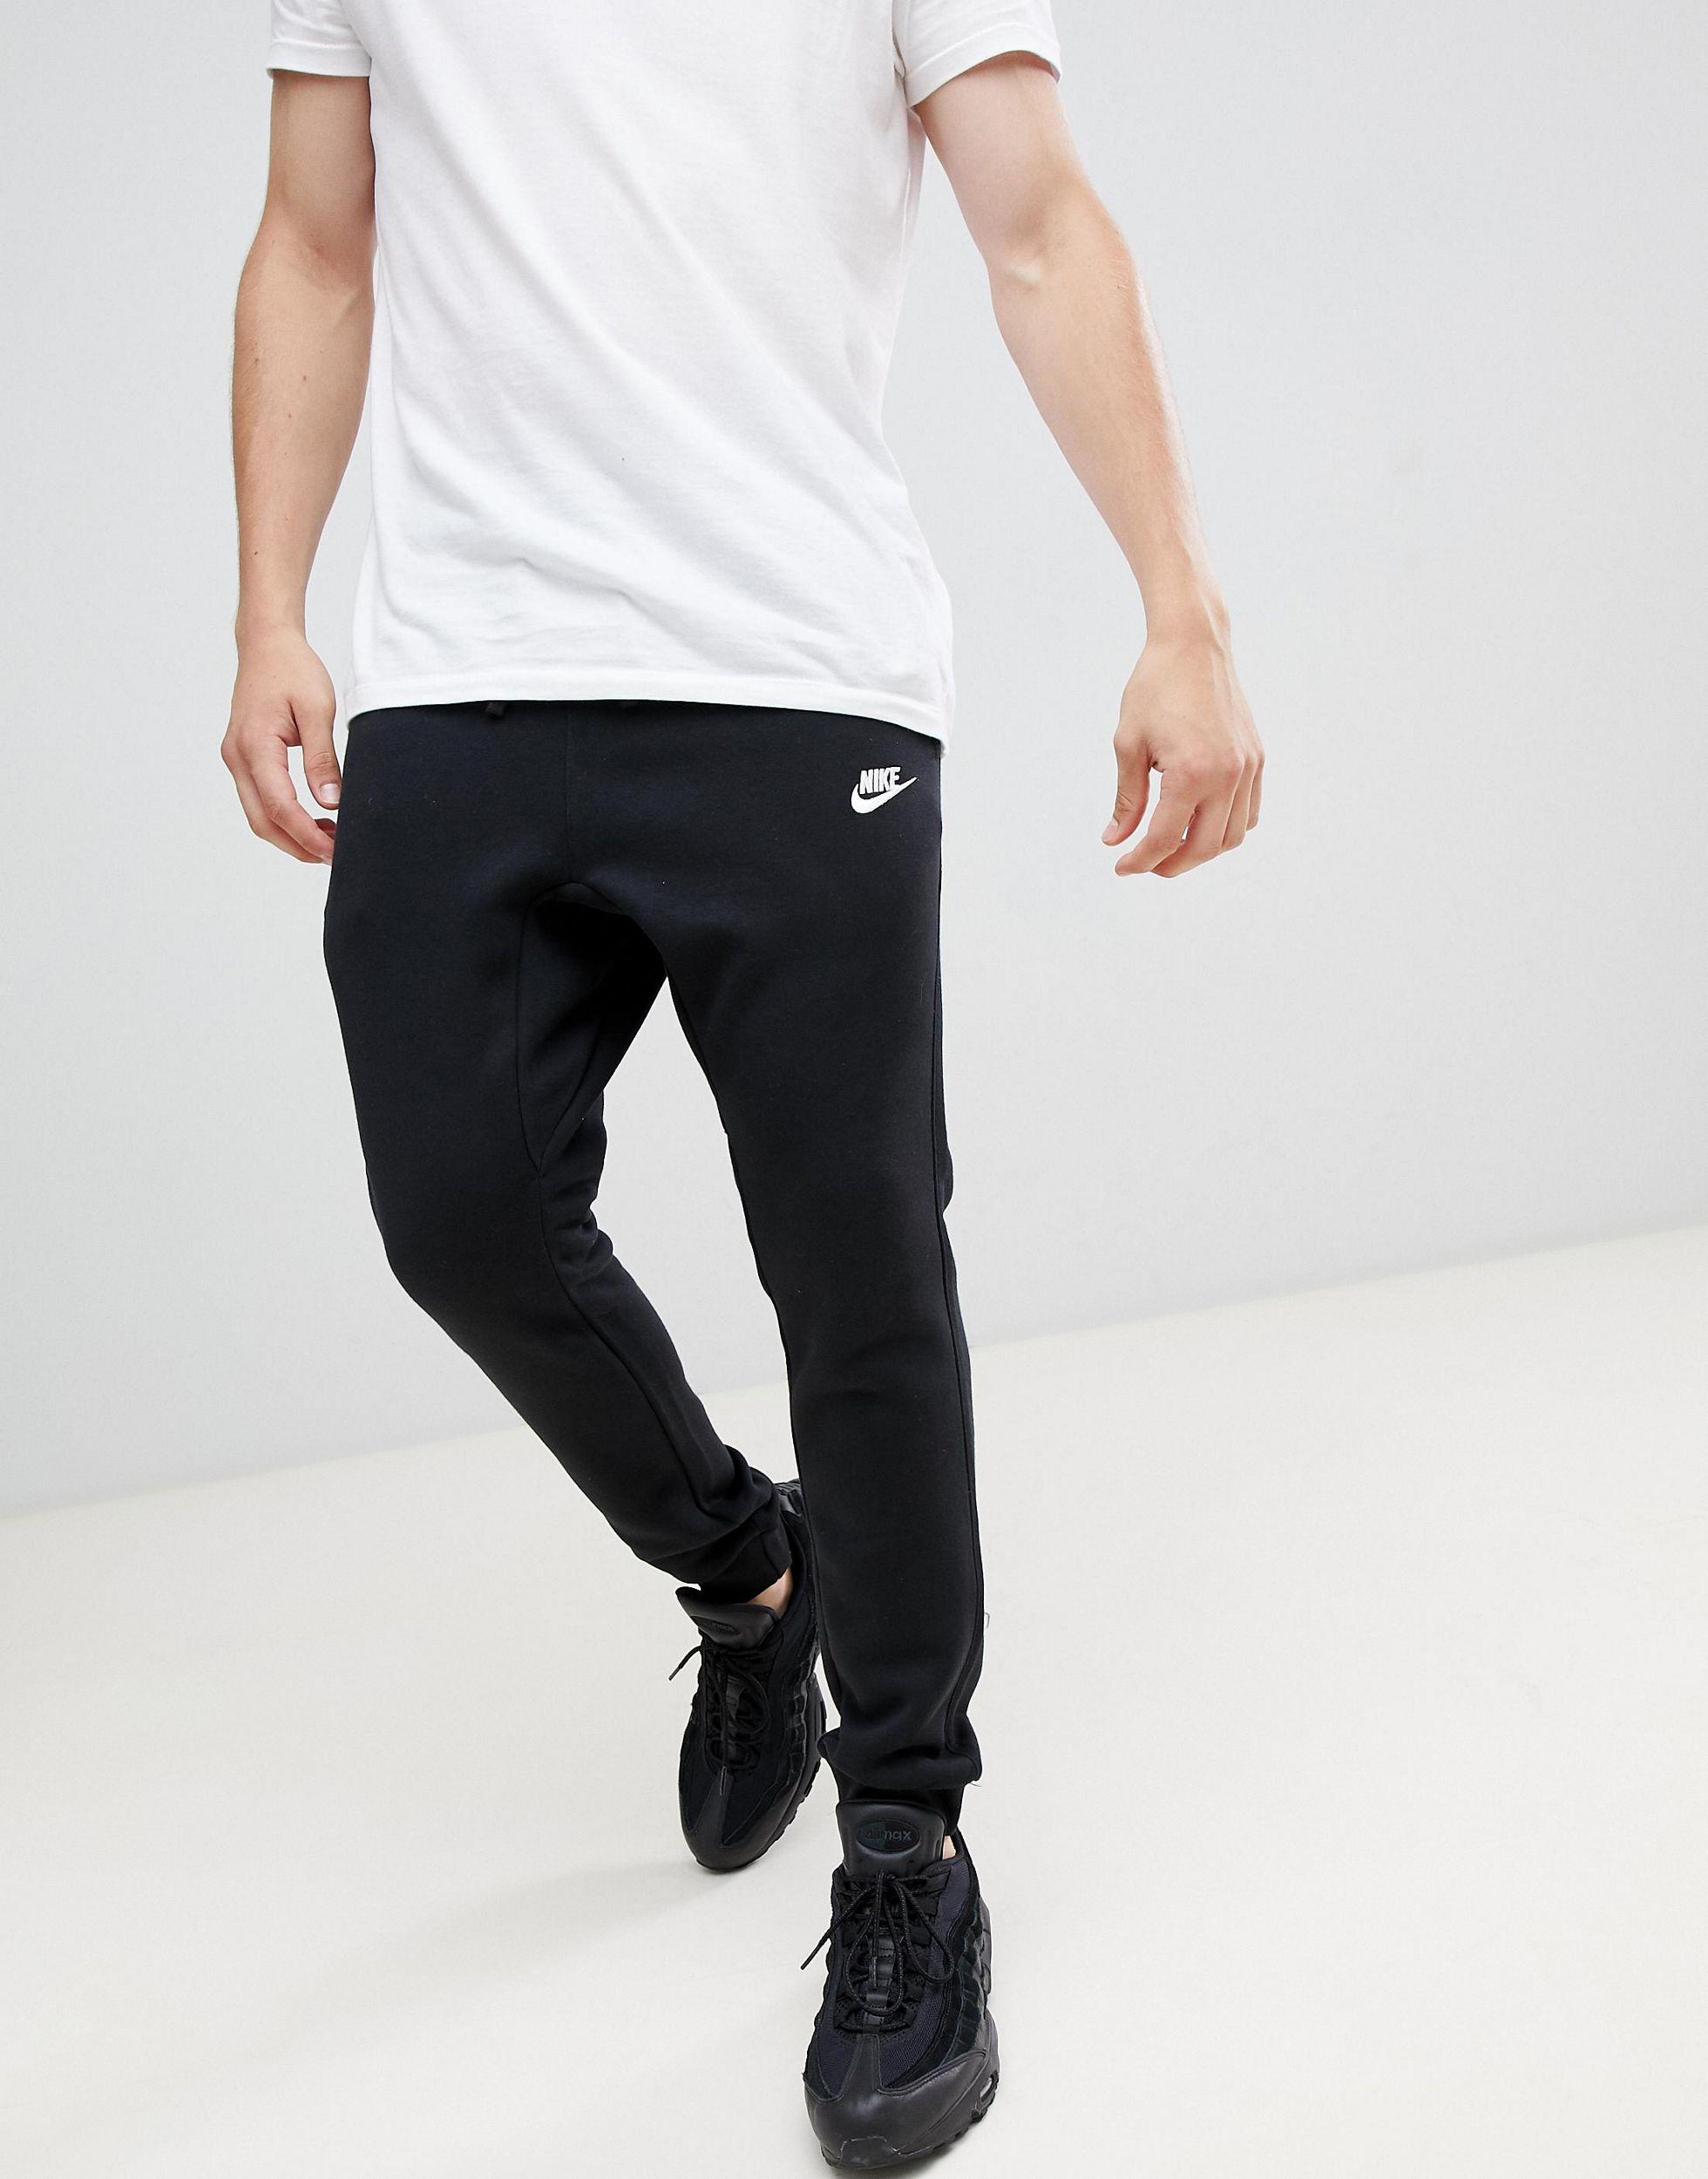 Nike Cotton Cuffed Club jogger in Black for Men - Lyst